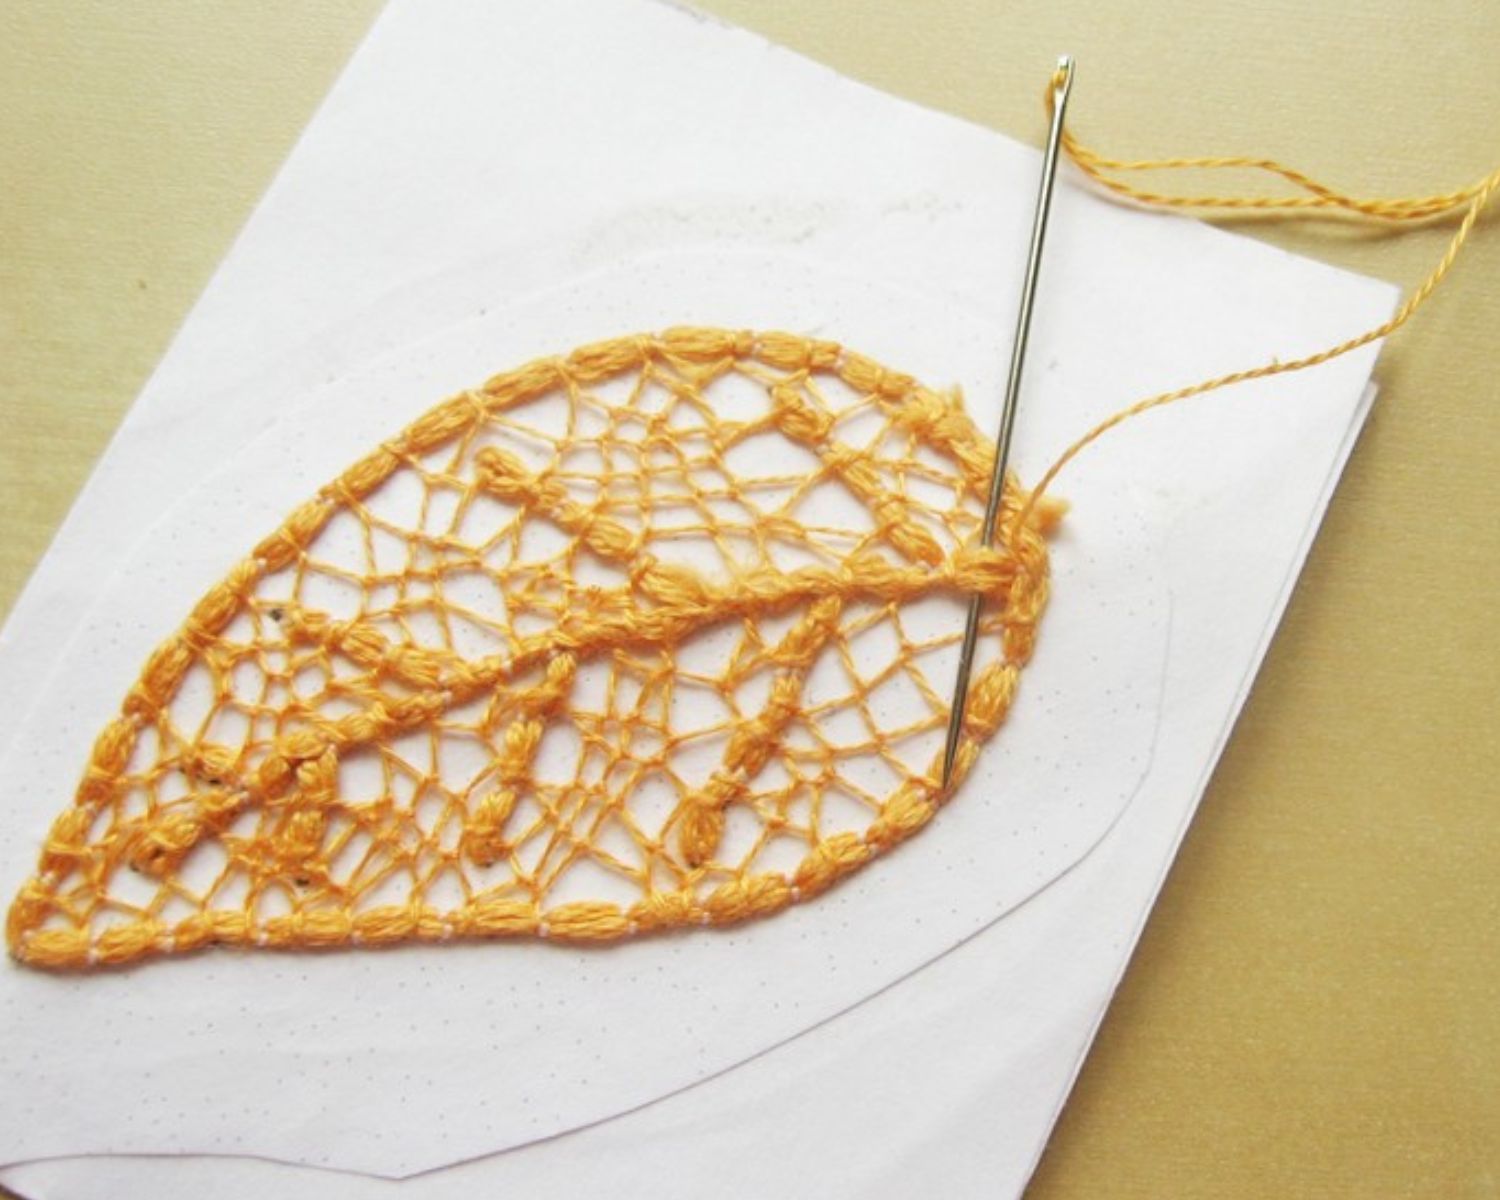 13-astonishing-facts-about-needle-lace-making